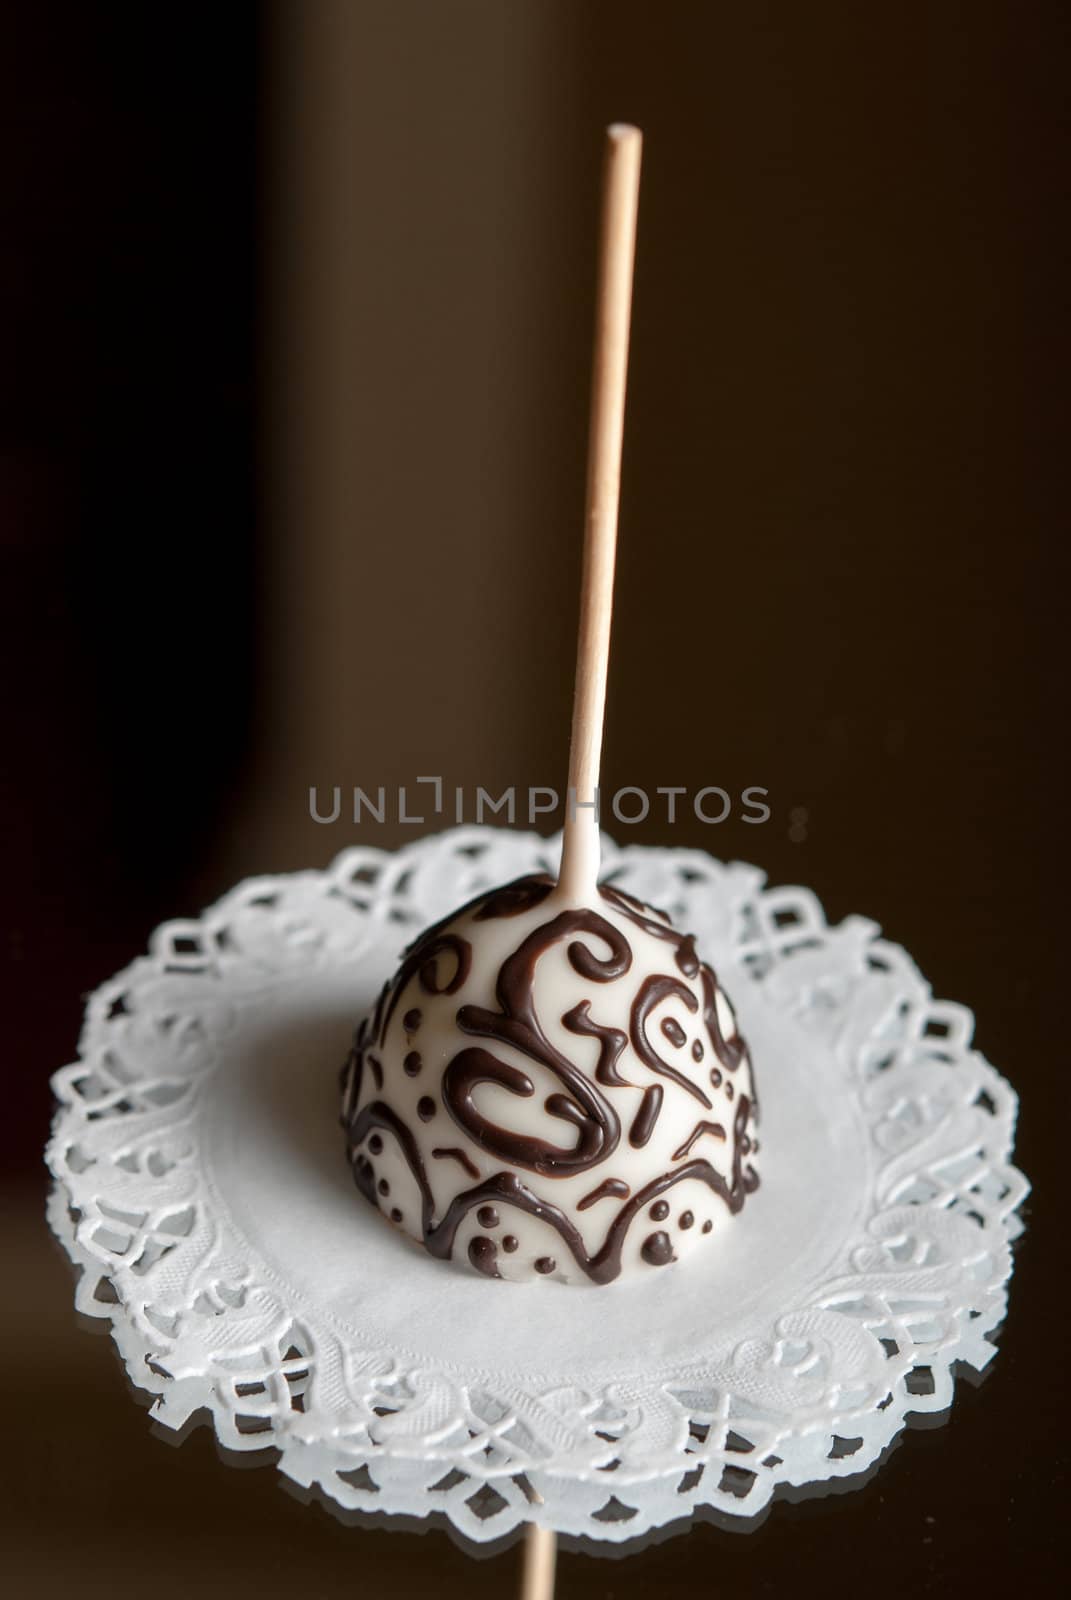 Luxury handmade white chocolate candy with stick